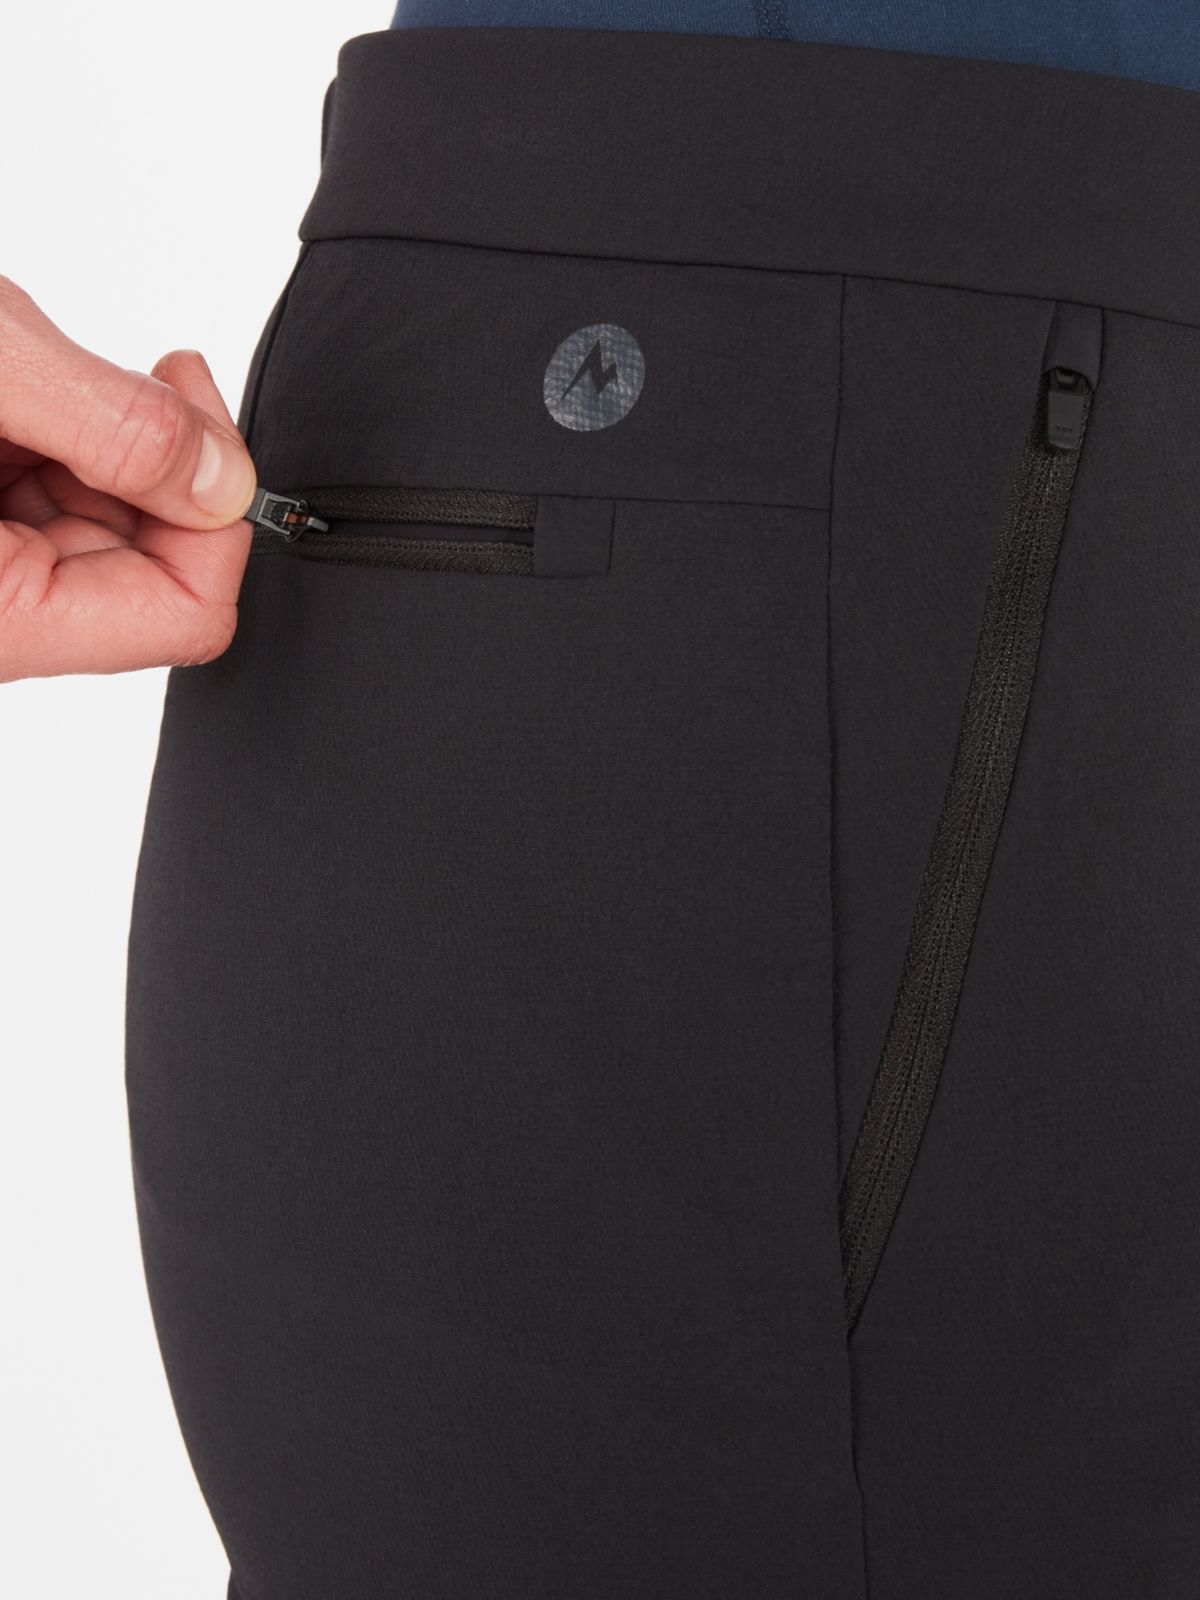 womens snow pants zoom in of zipper pocket